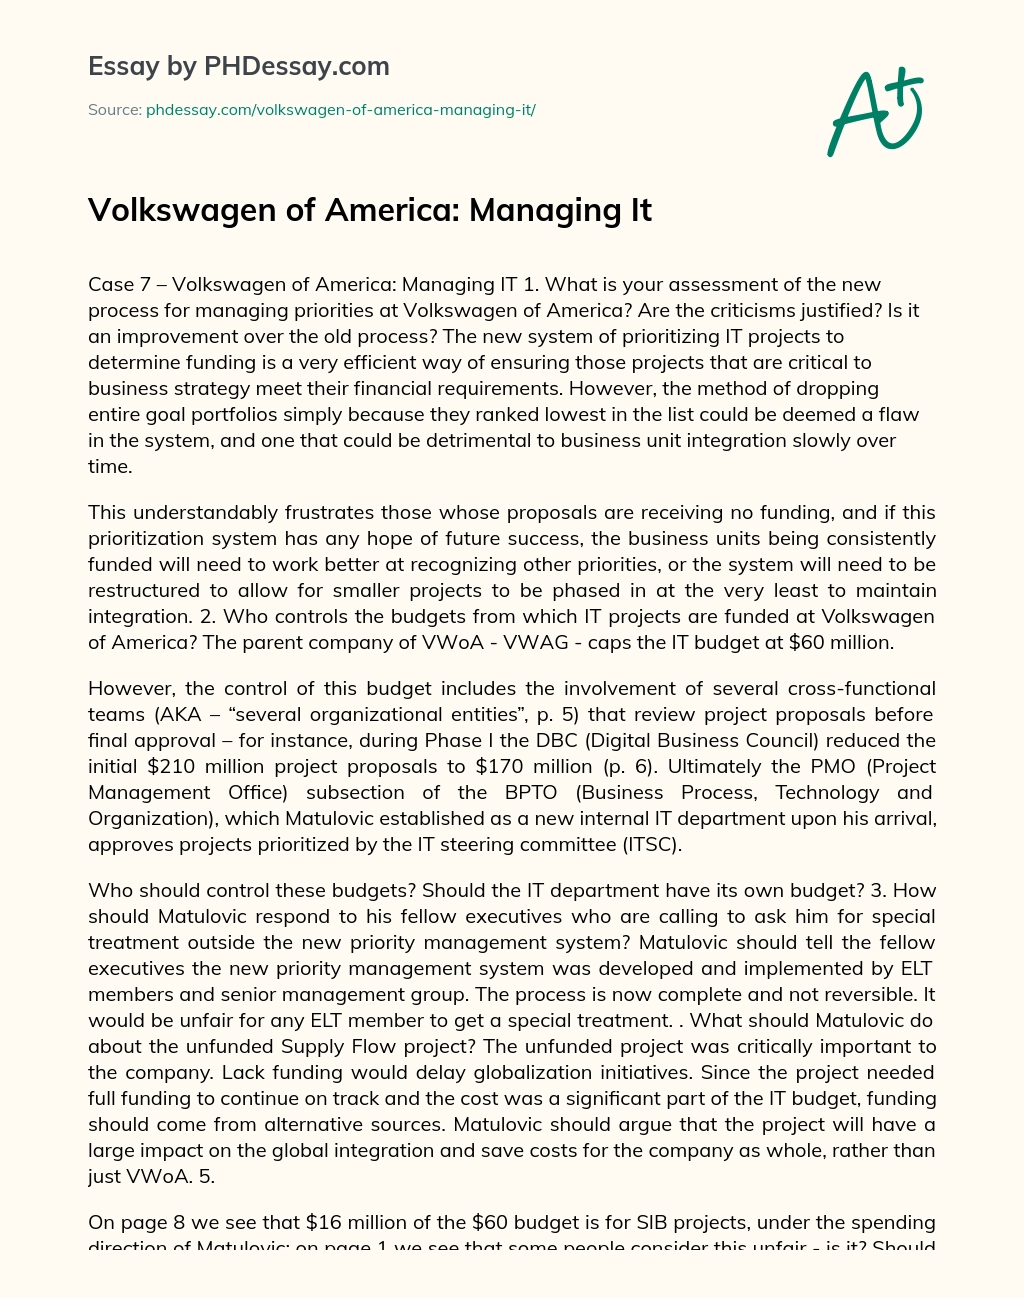 Volkswagen of America: Managing It essay